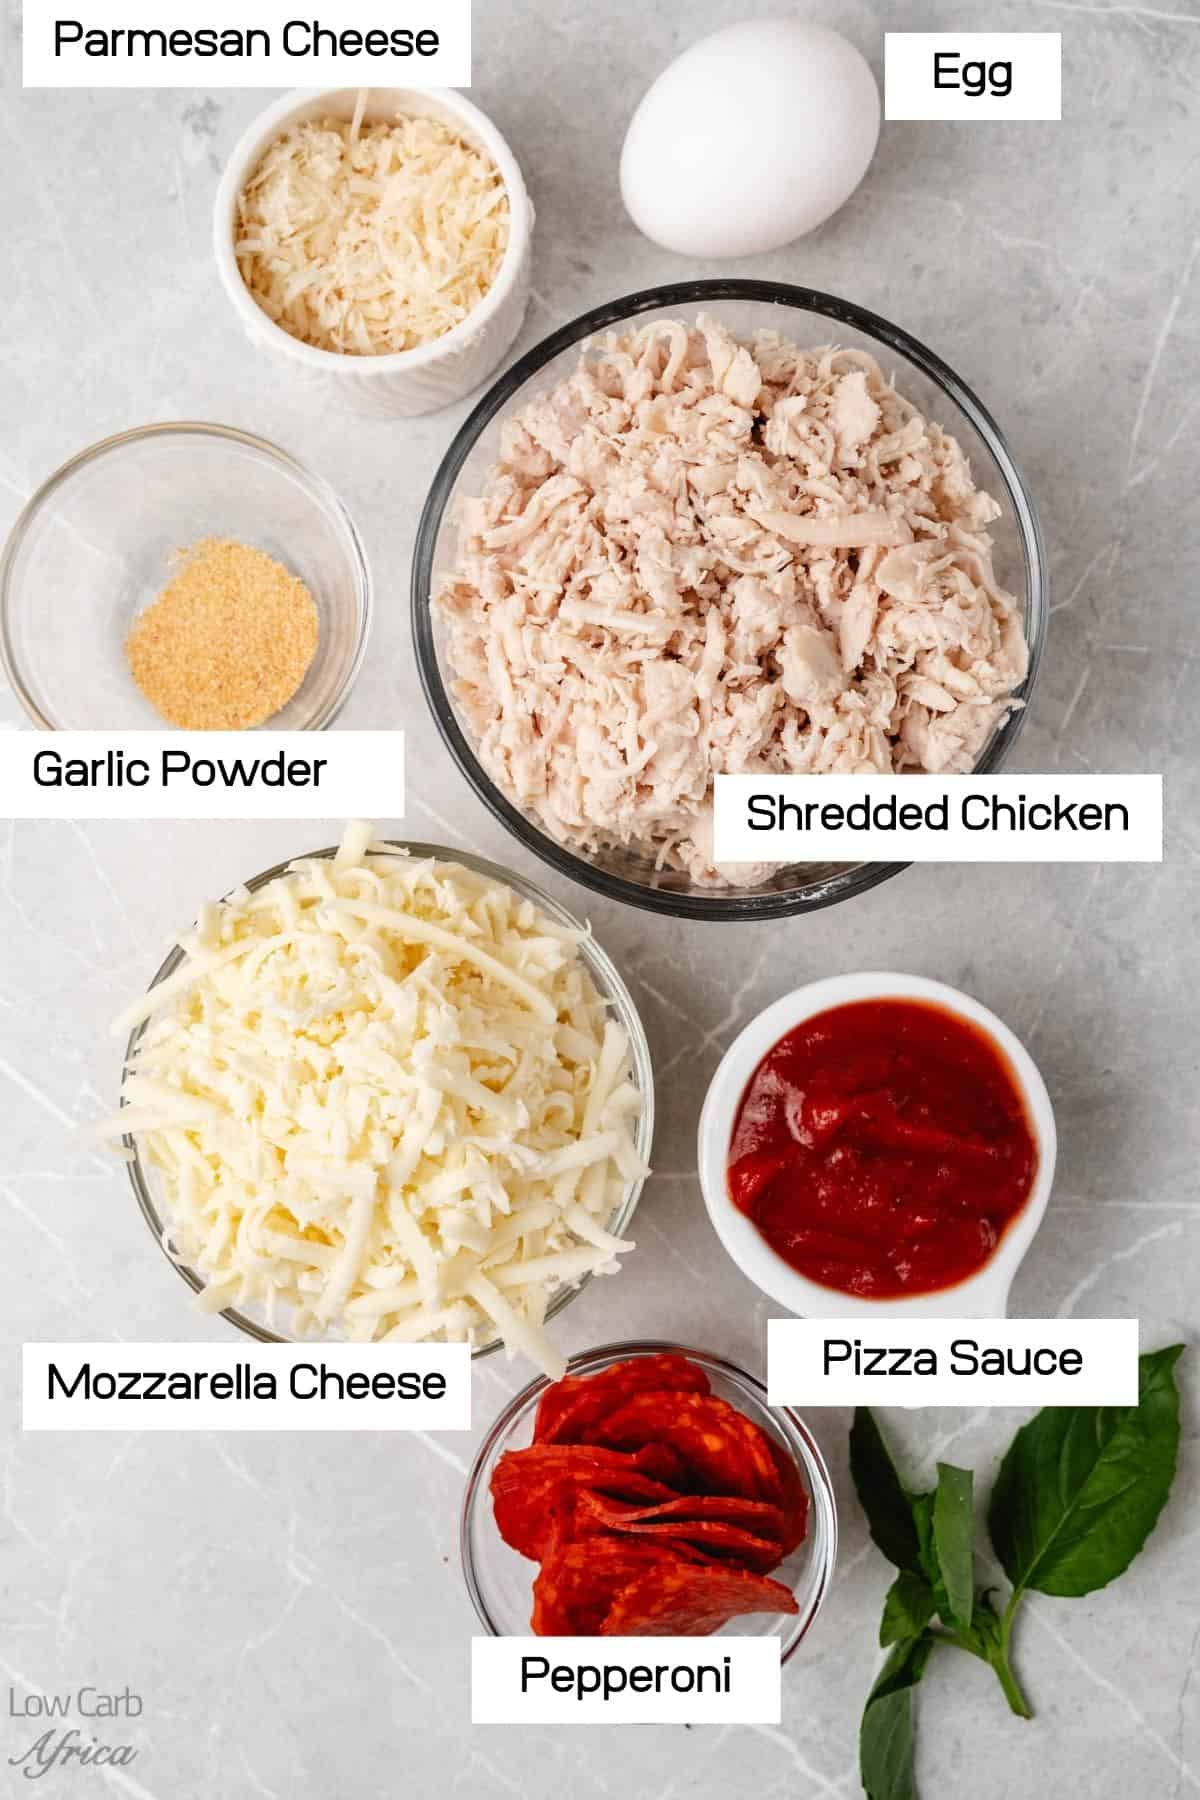 Shredded chciken, garlic powder and pizza sauce